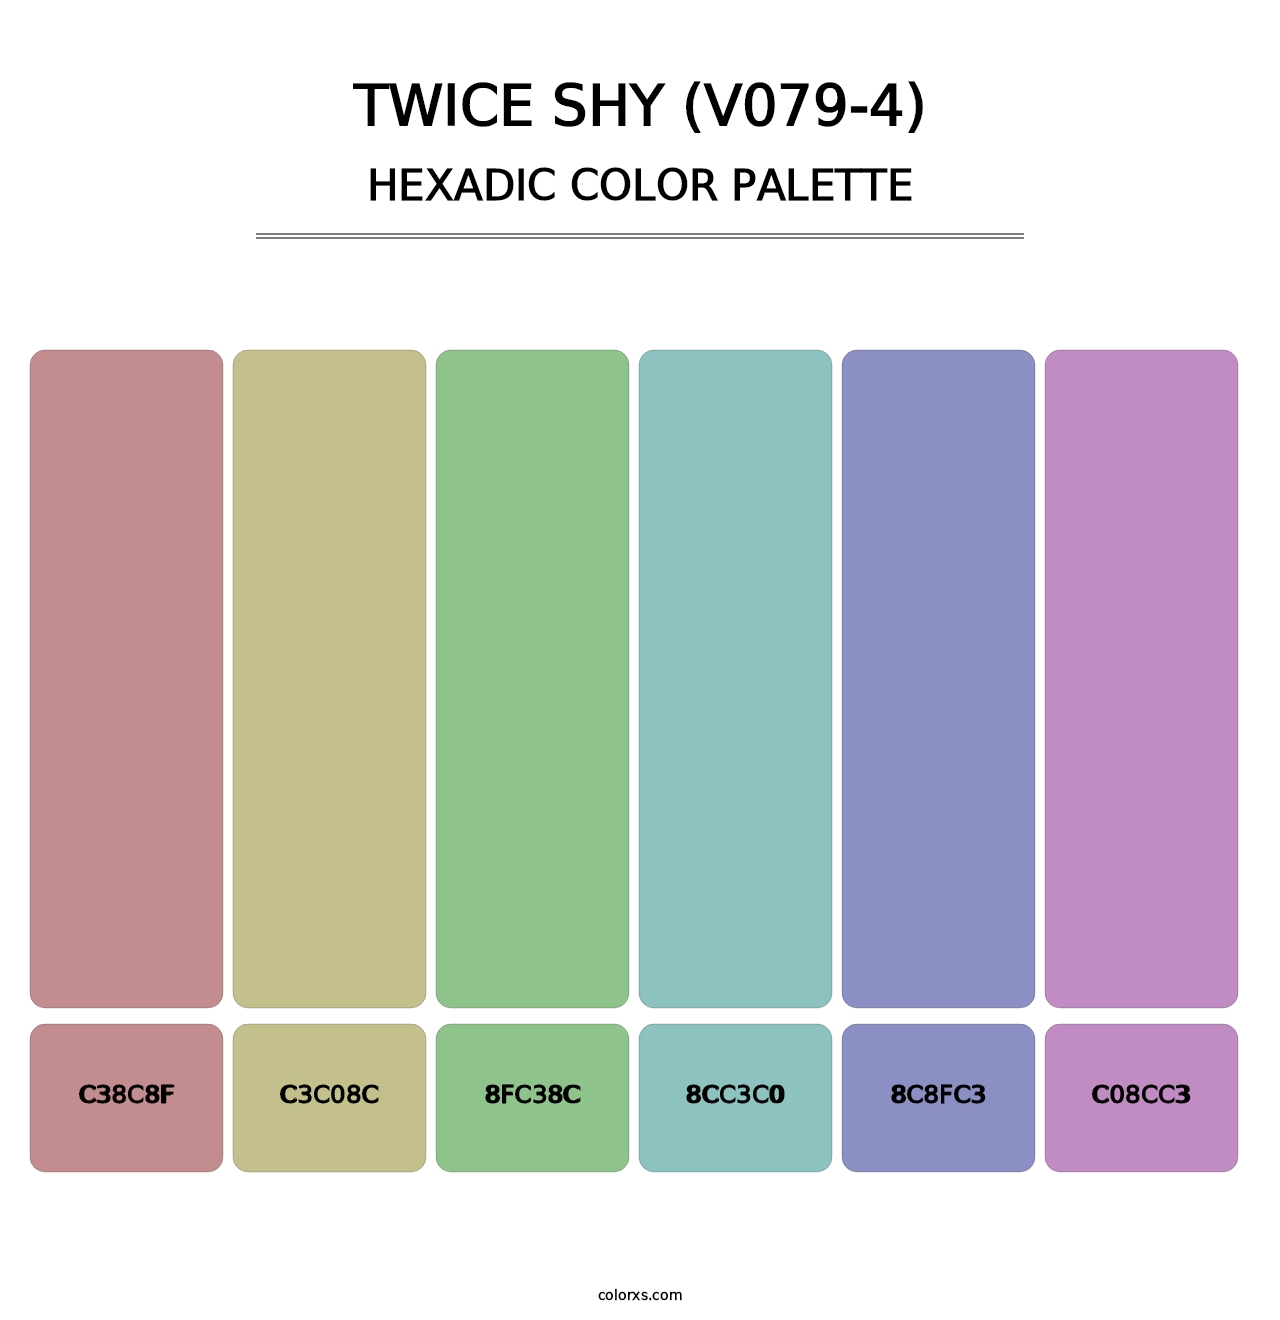 Twice Shy (V079-4) - Hexadic Color Palette